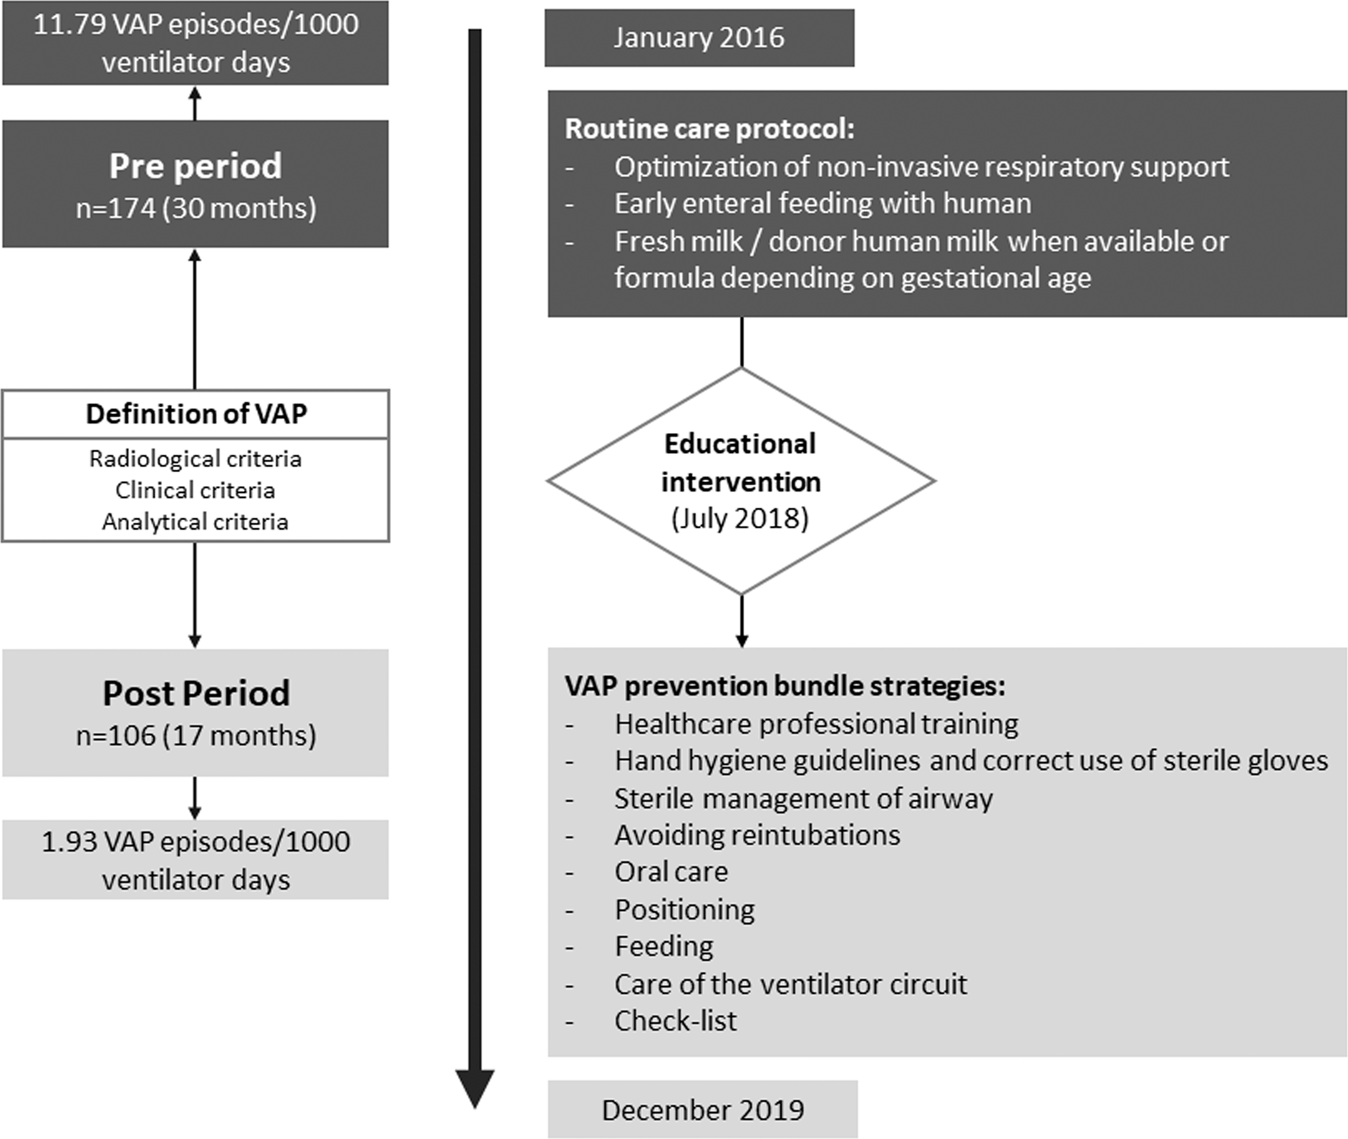 Preventive bundle approach decreases the incidence of ventilator